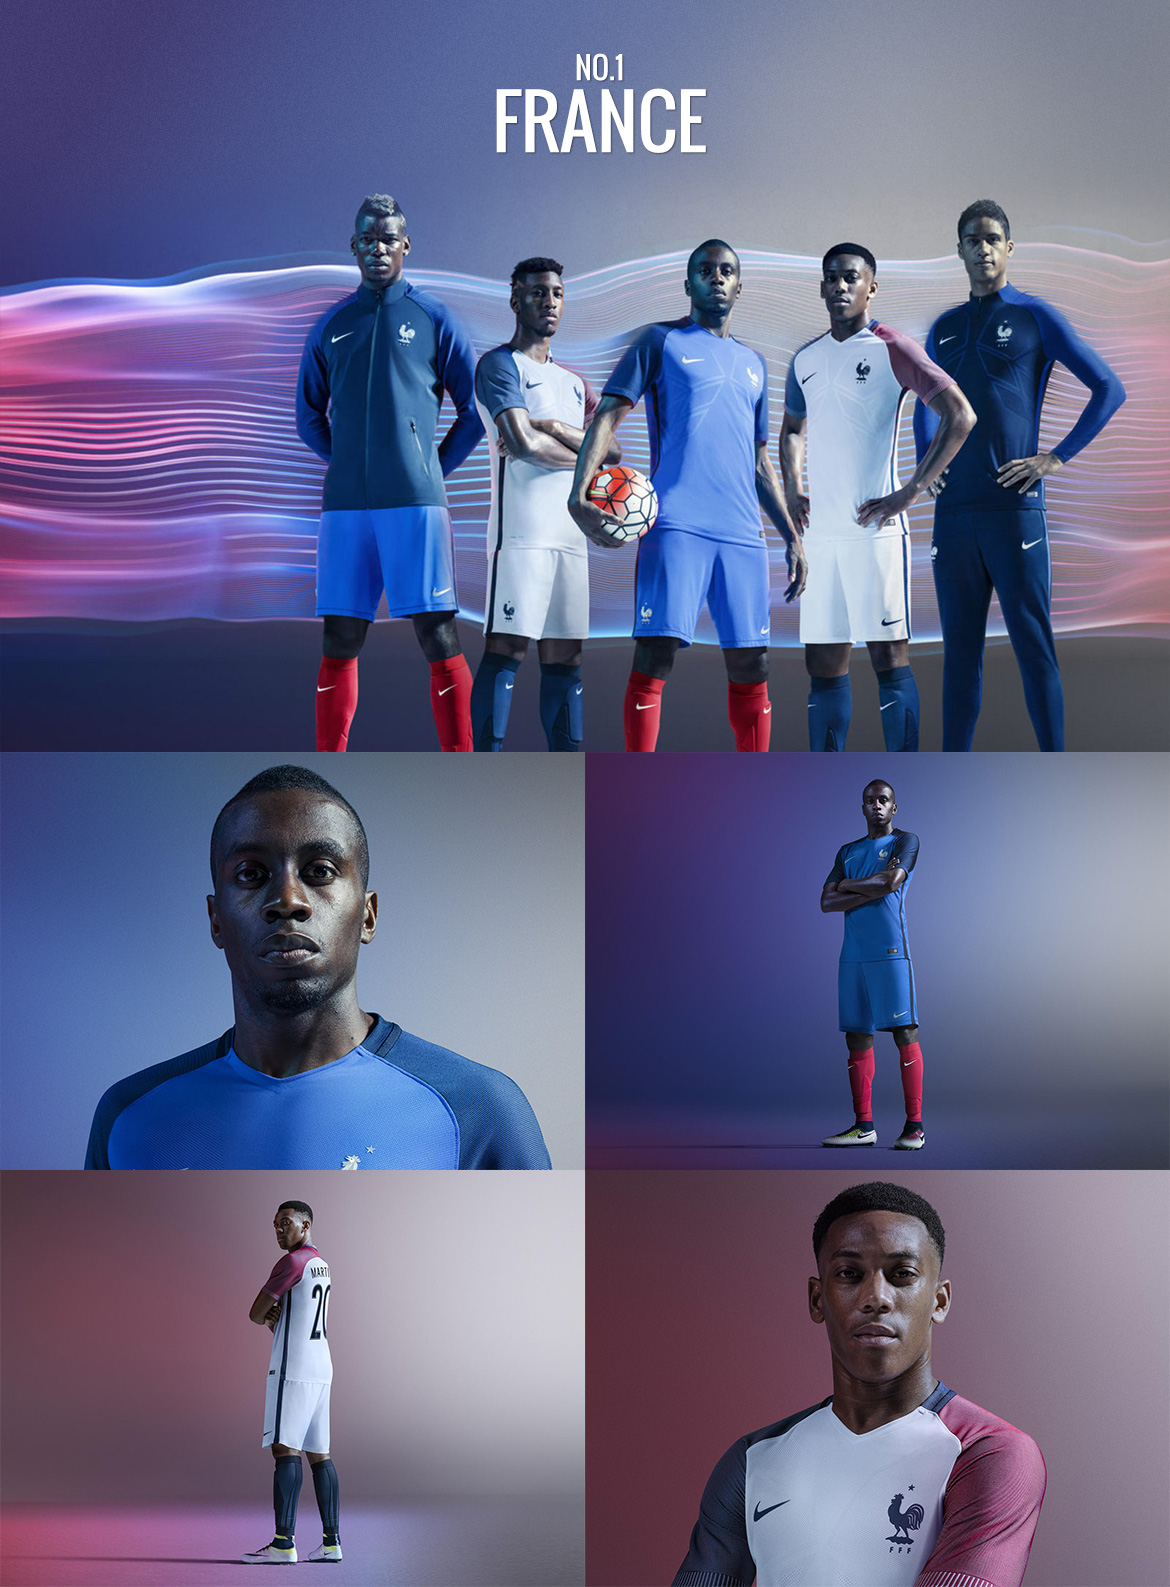 UEFA Euro 2016 - France - Football Kit Design